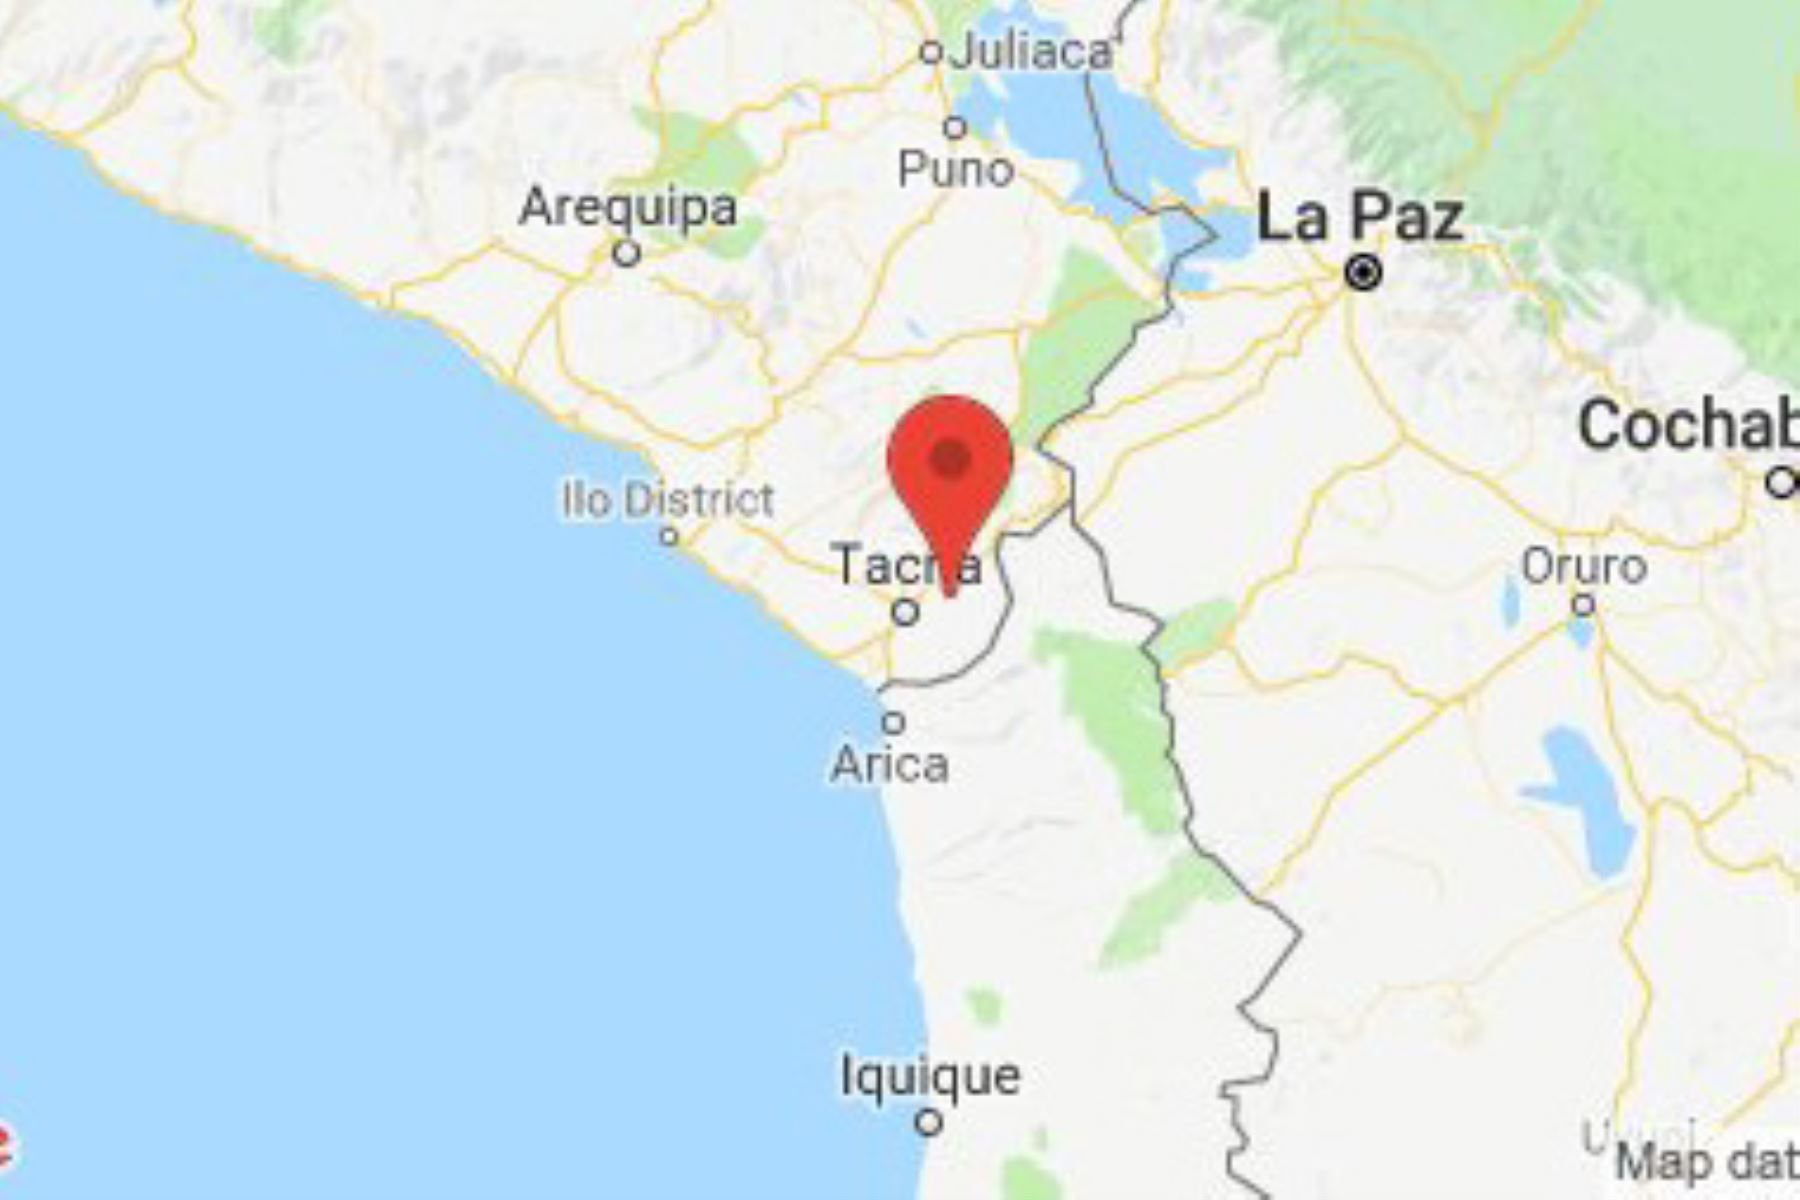 Fuerte sismo de magnitud 5.0 se registra cerca de la localidad de Calana, en Tacna.